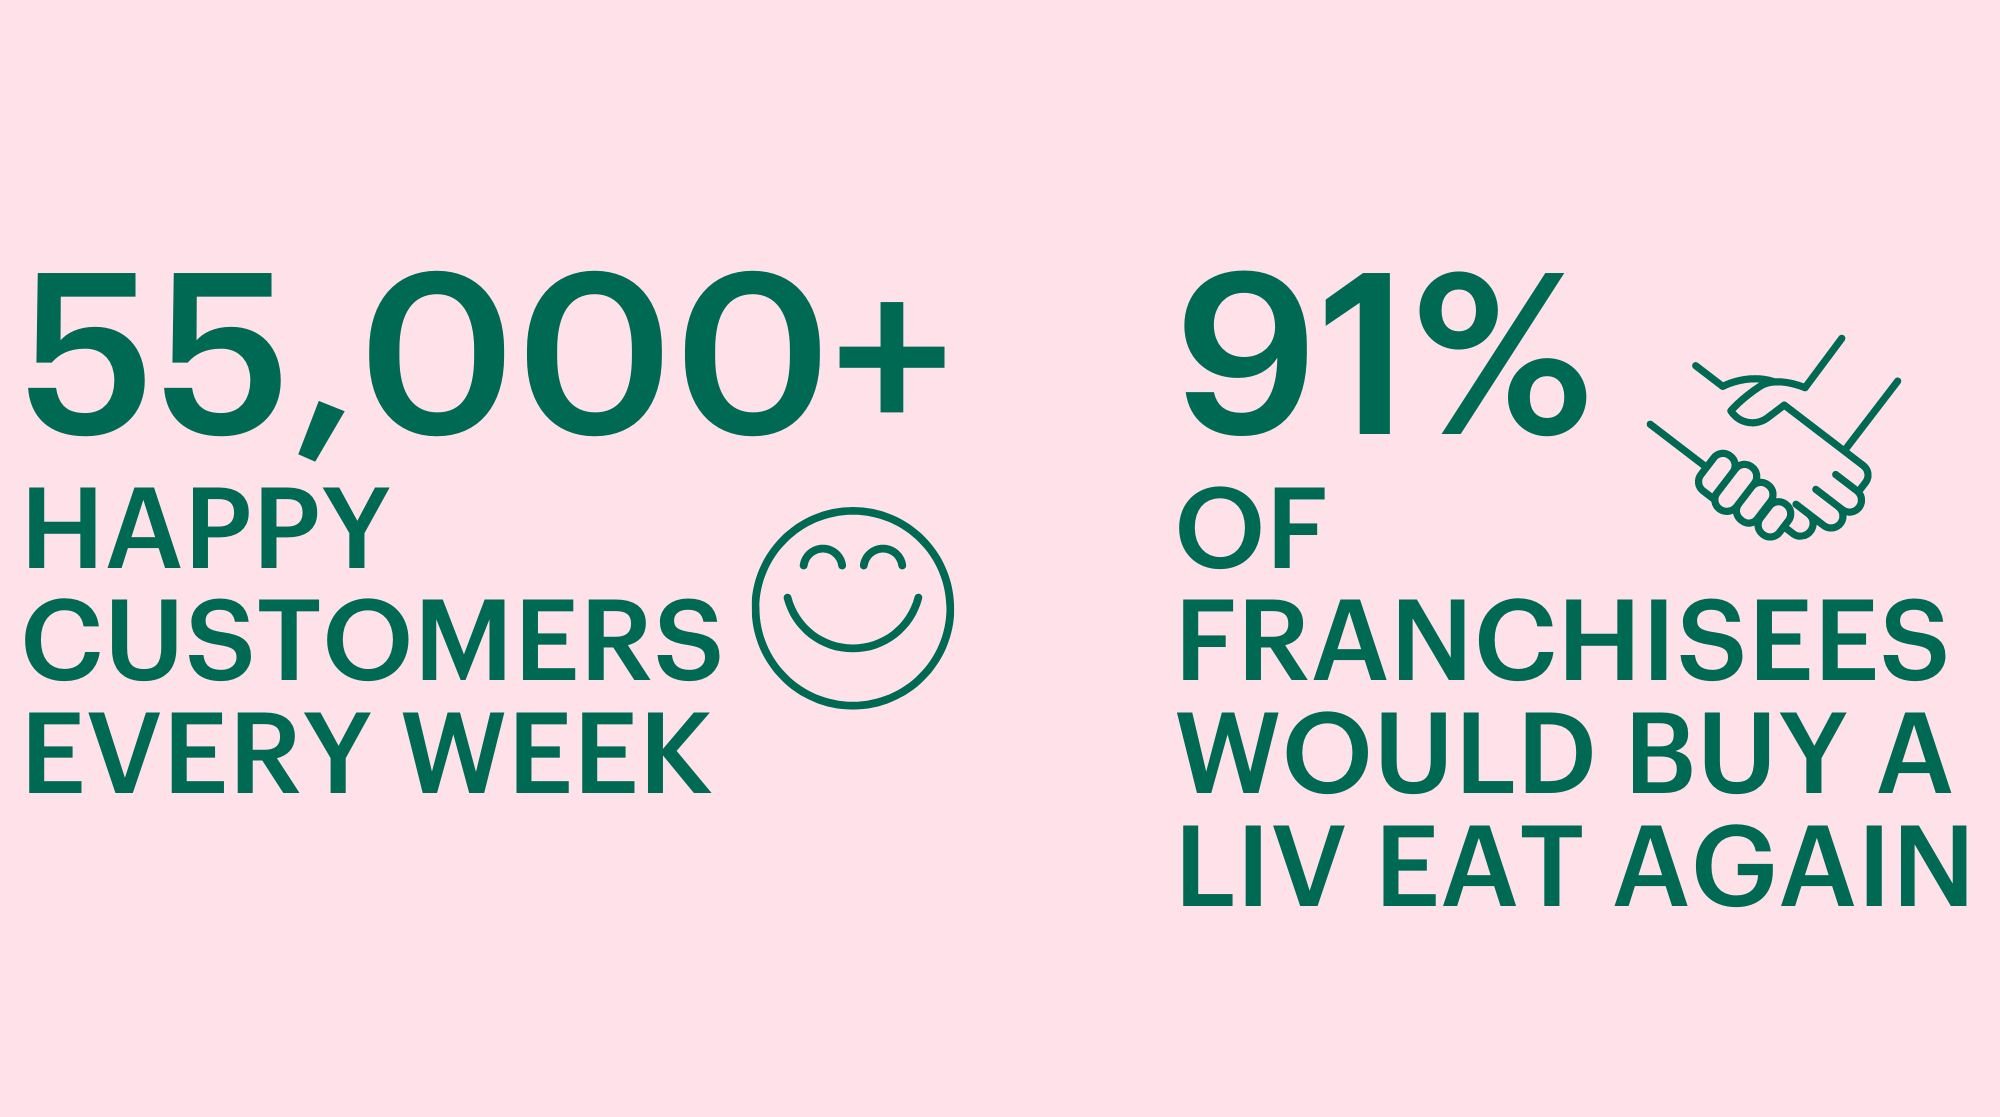 Liv Eat food franchise, 91% of franchisees would buy a Liv Eat Food franchise again